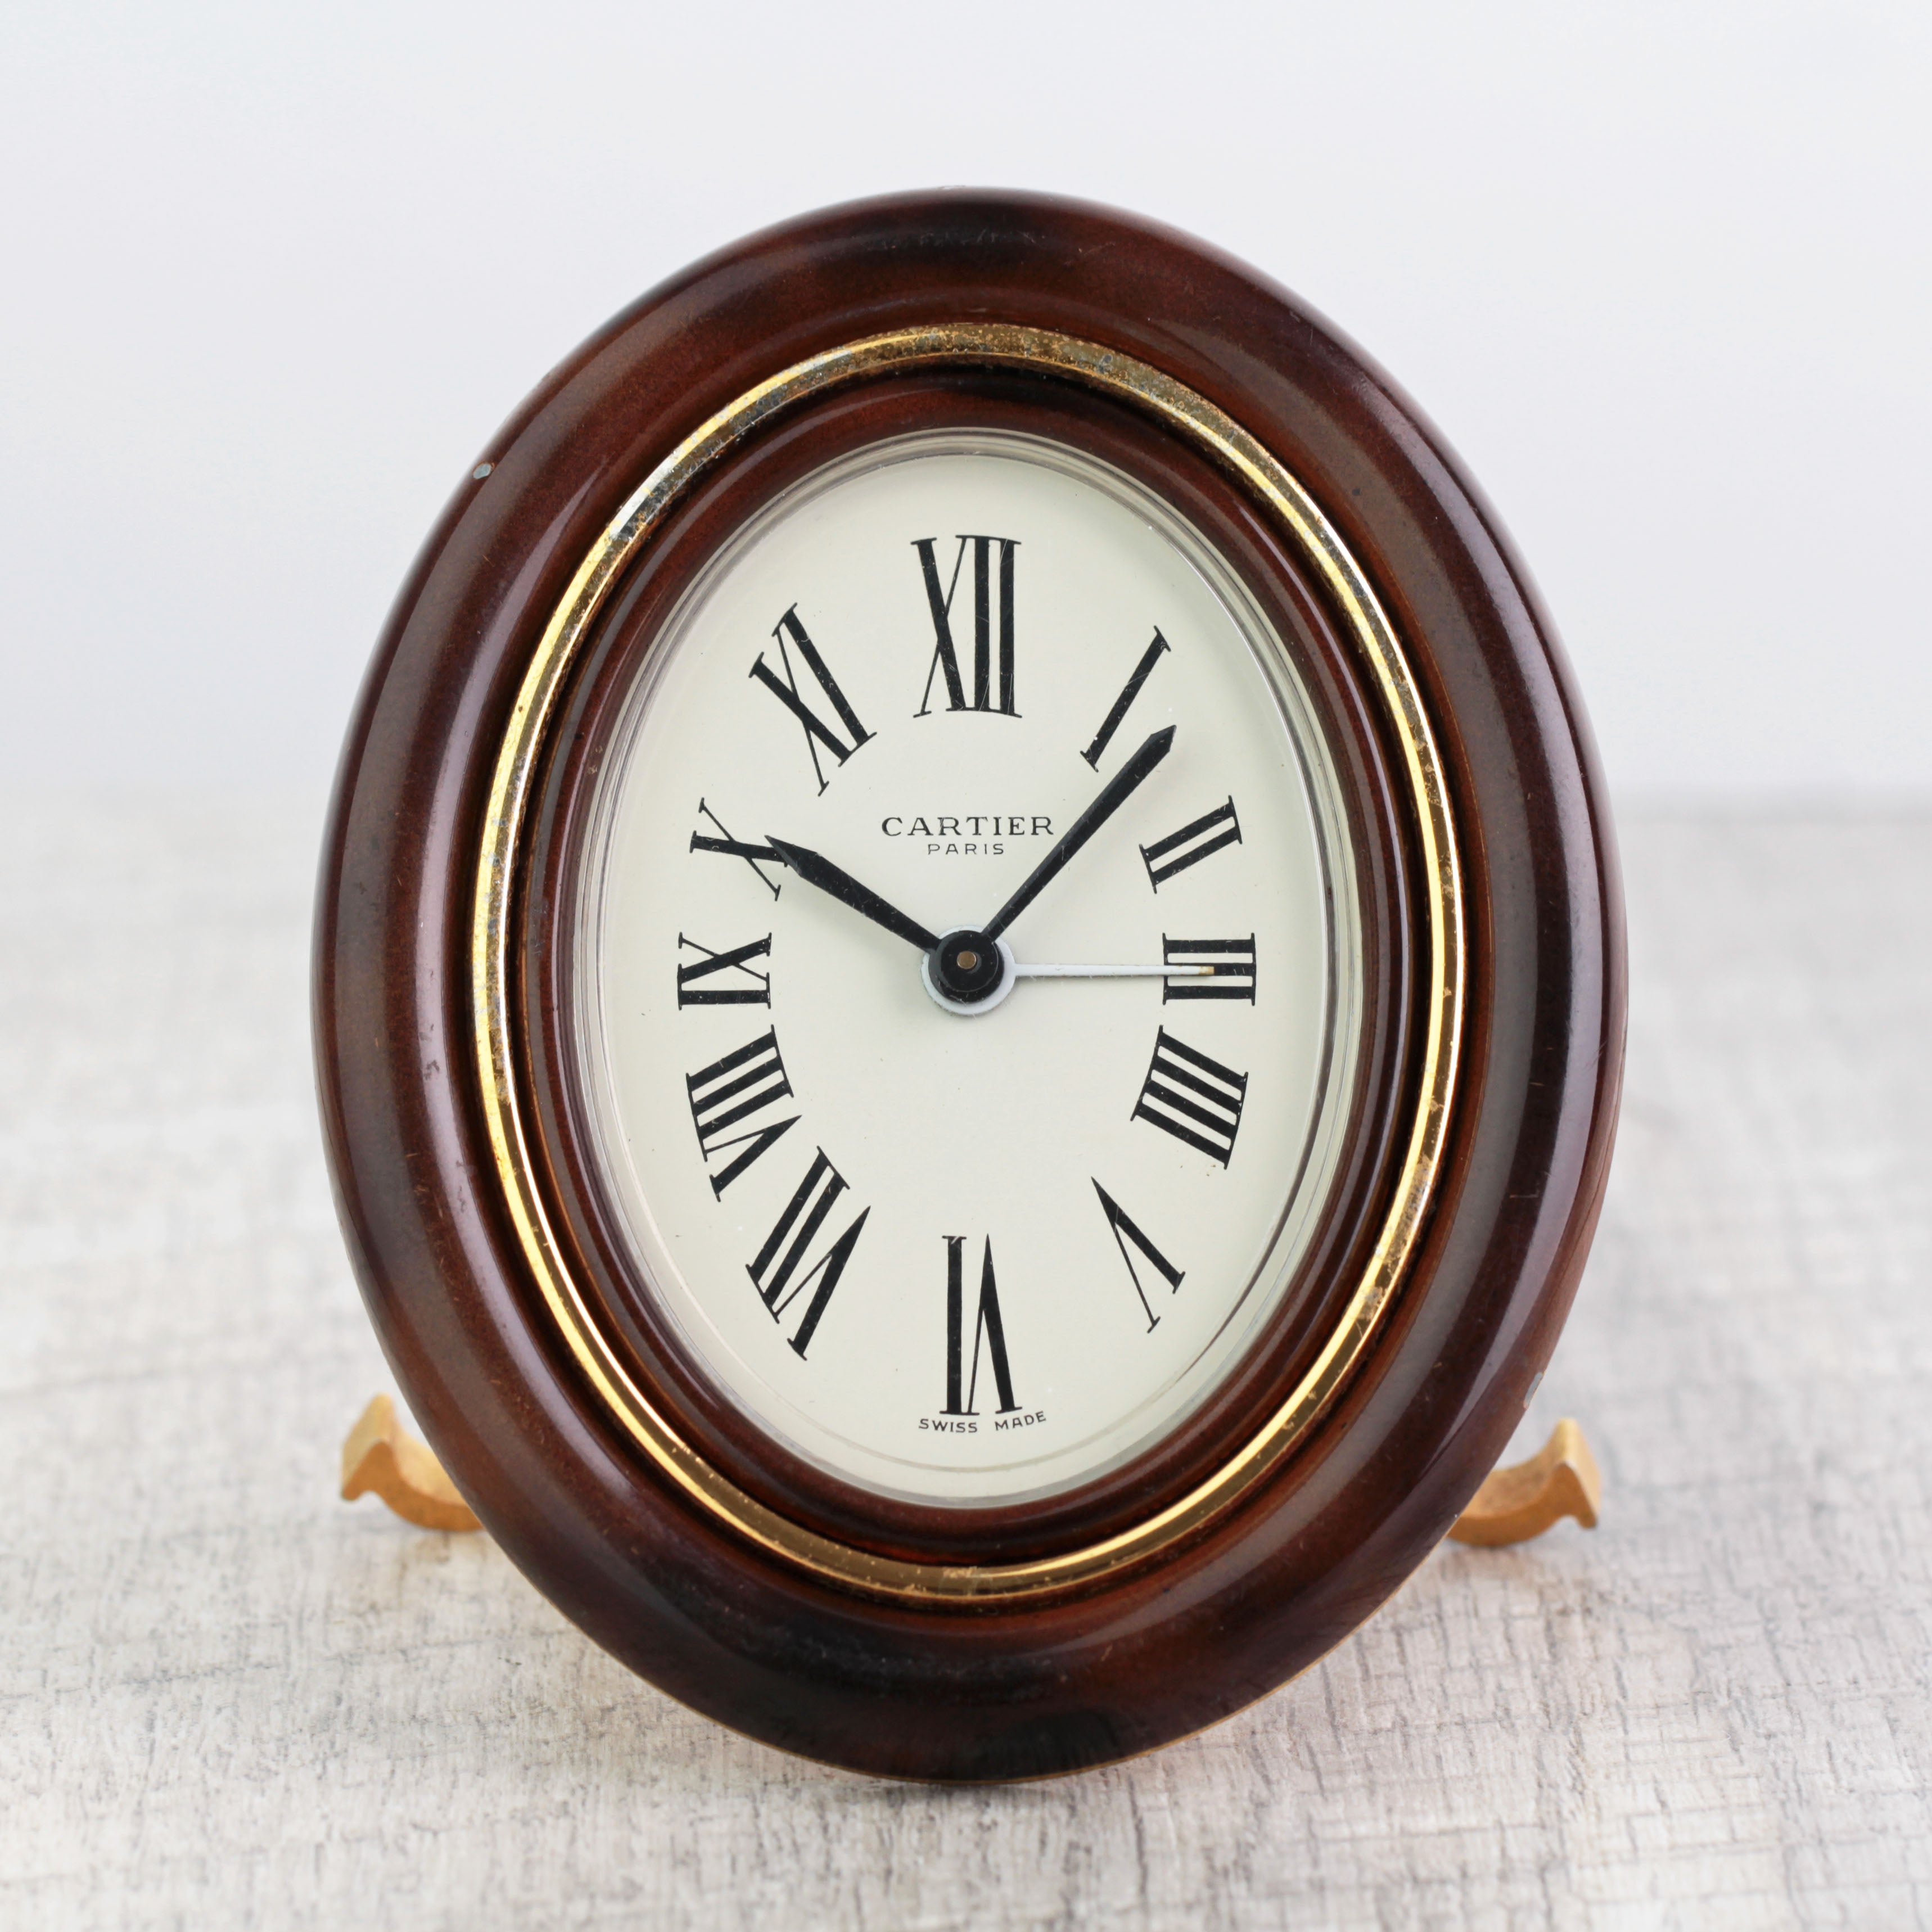 Cartier 1970s Travel Alarm Clock